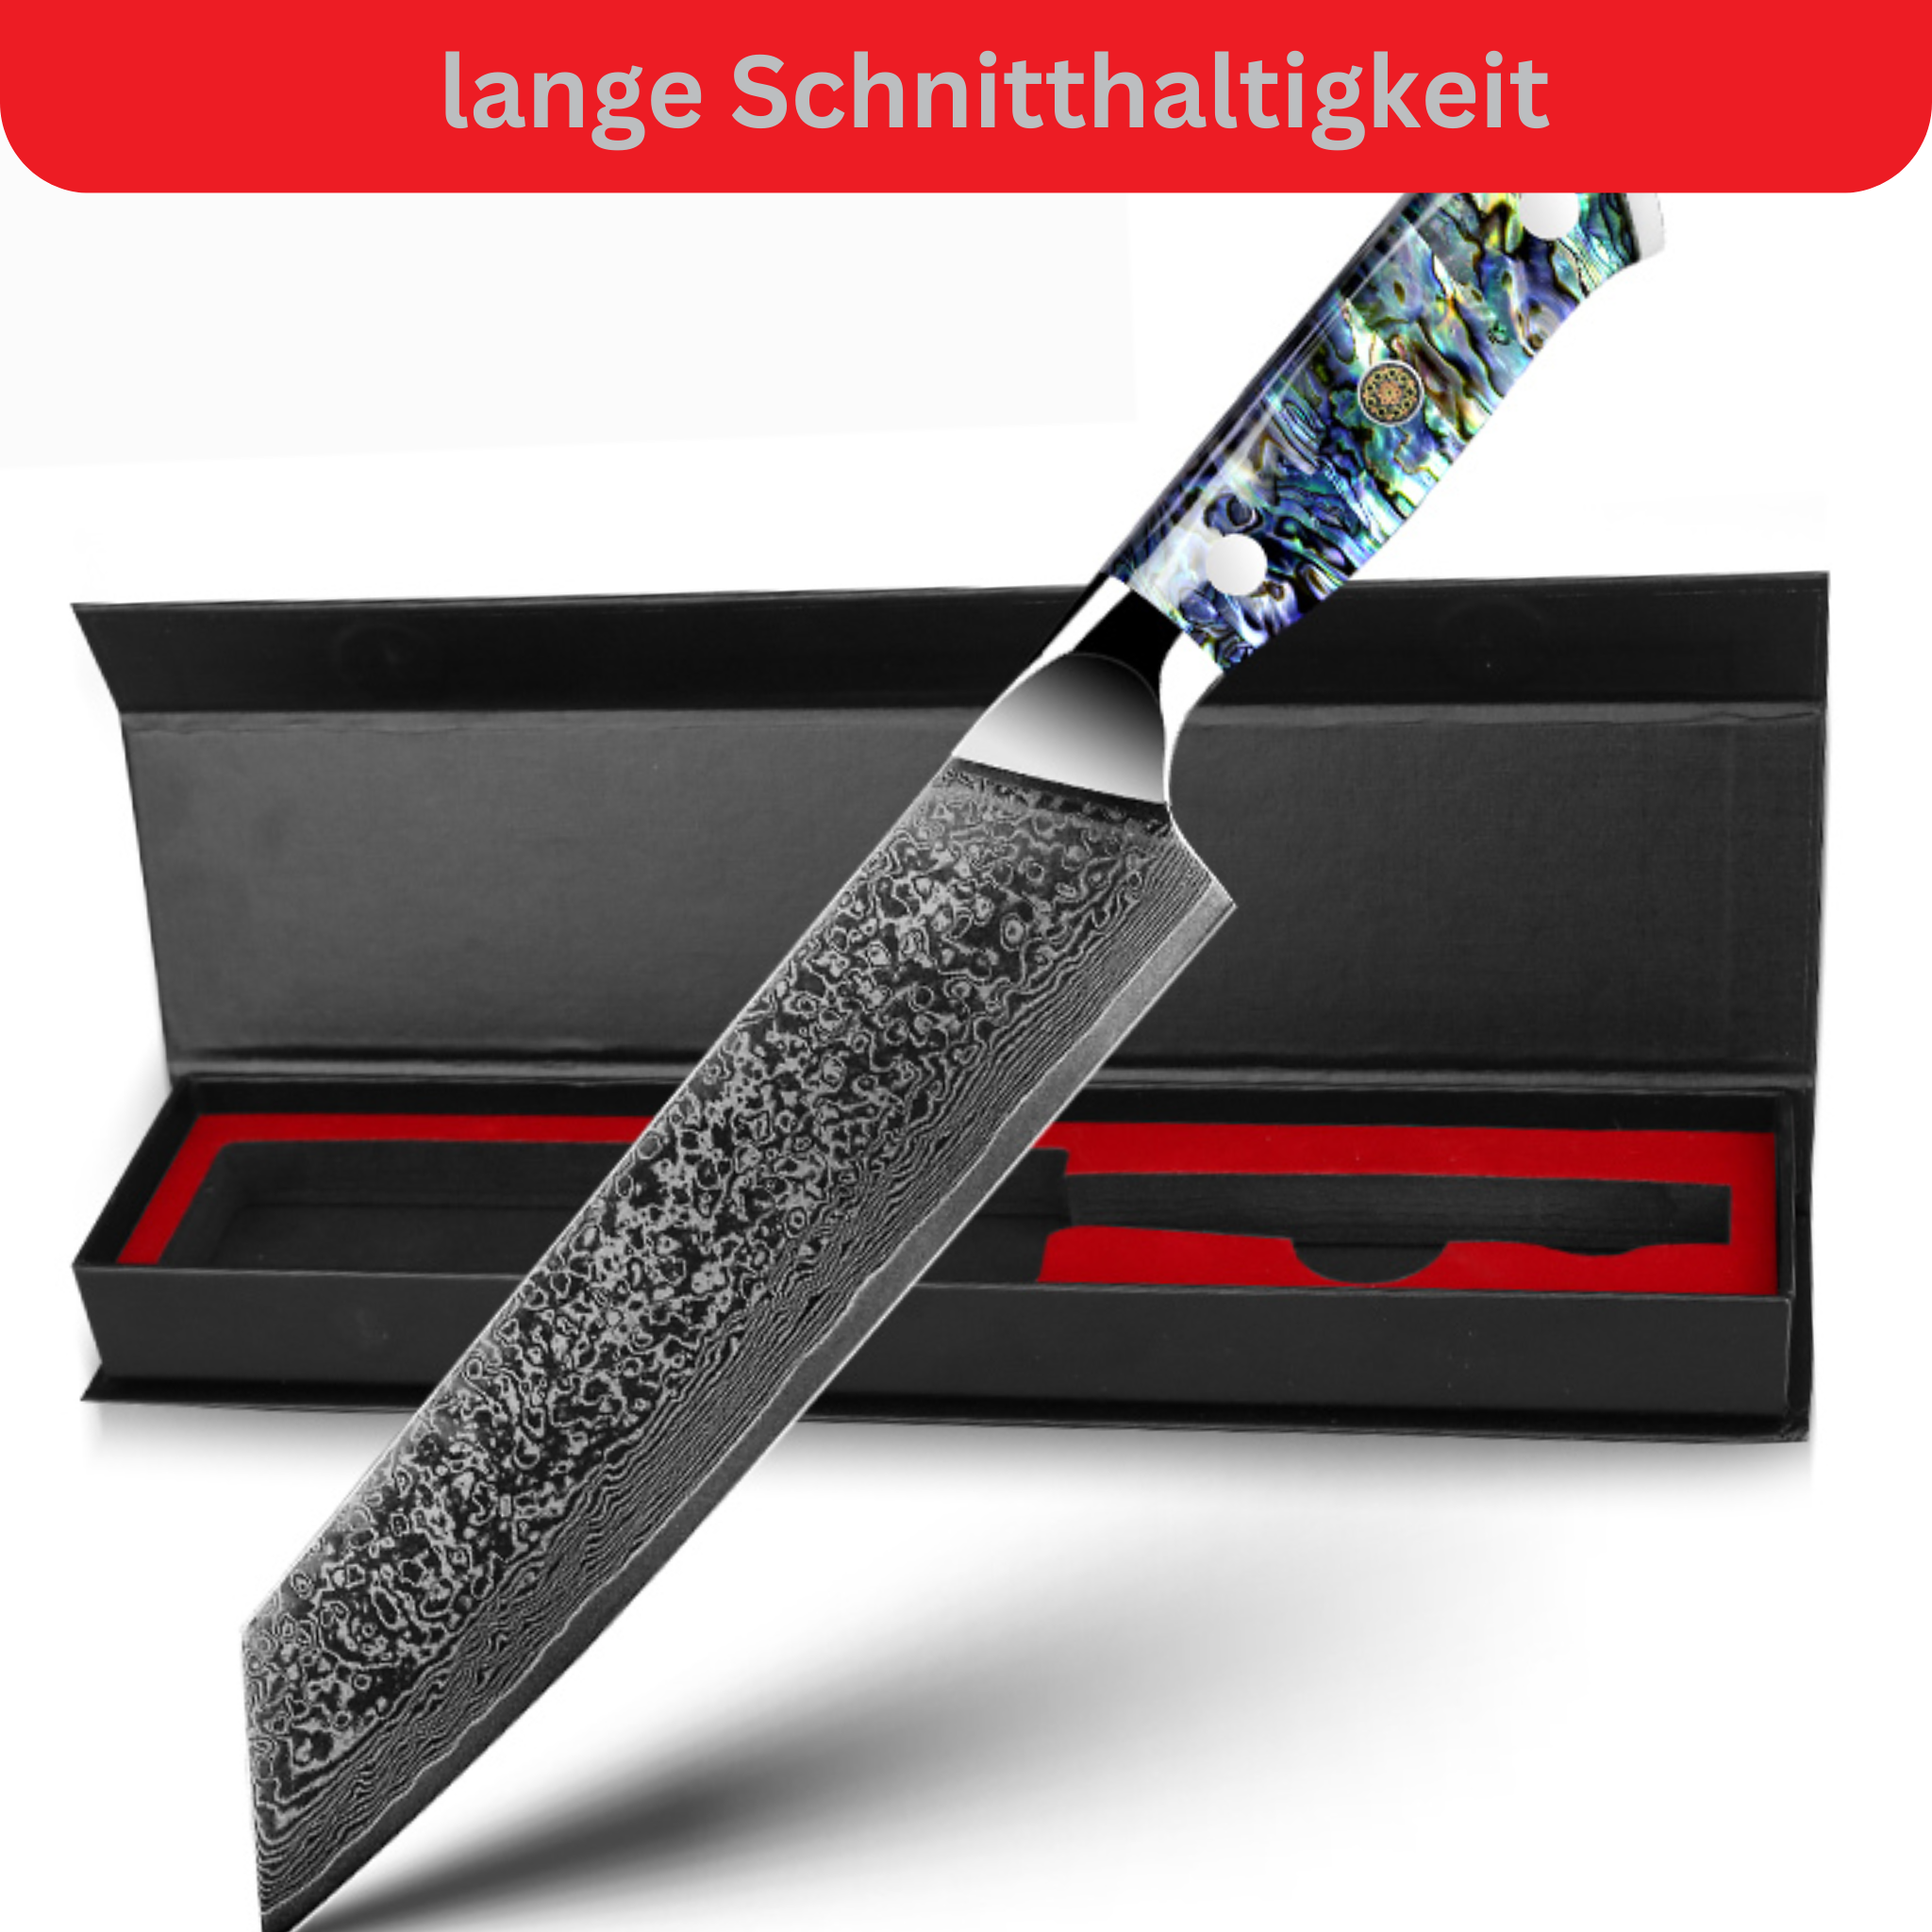 10-piece luxury damask kitchen knife set Awabi